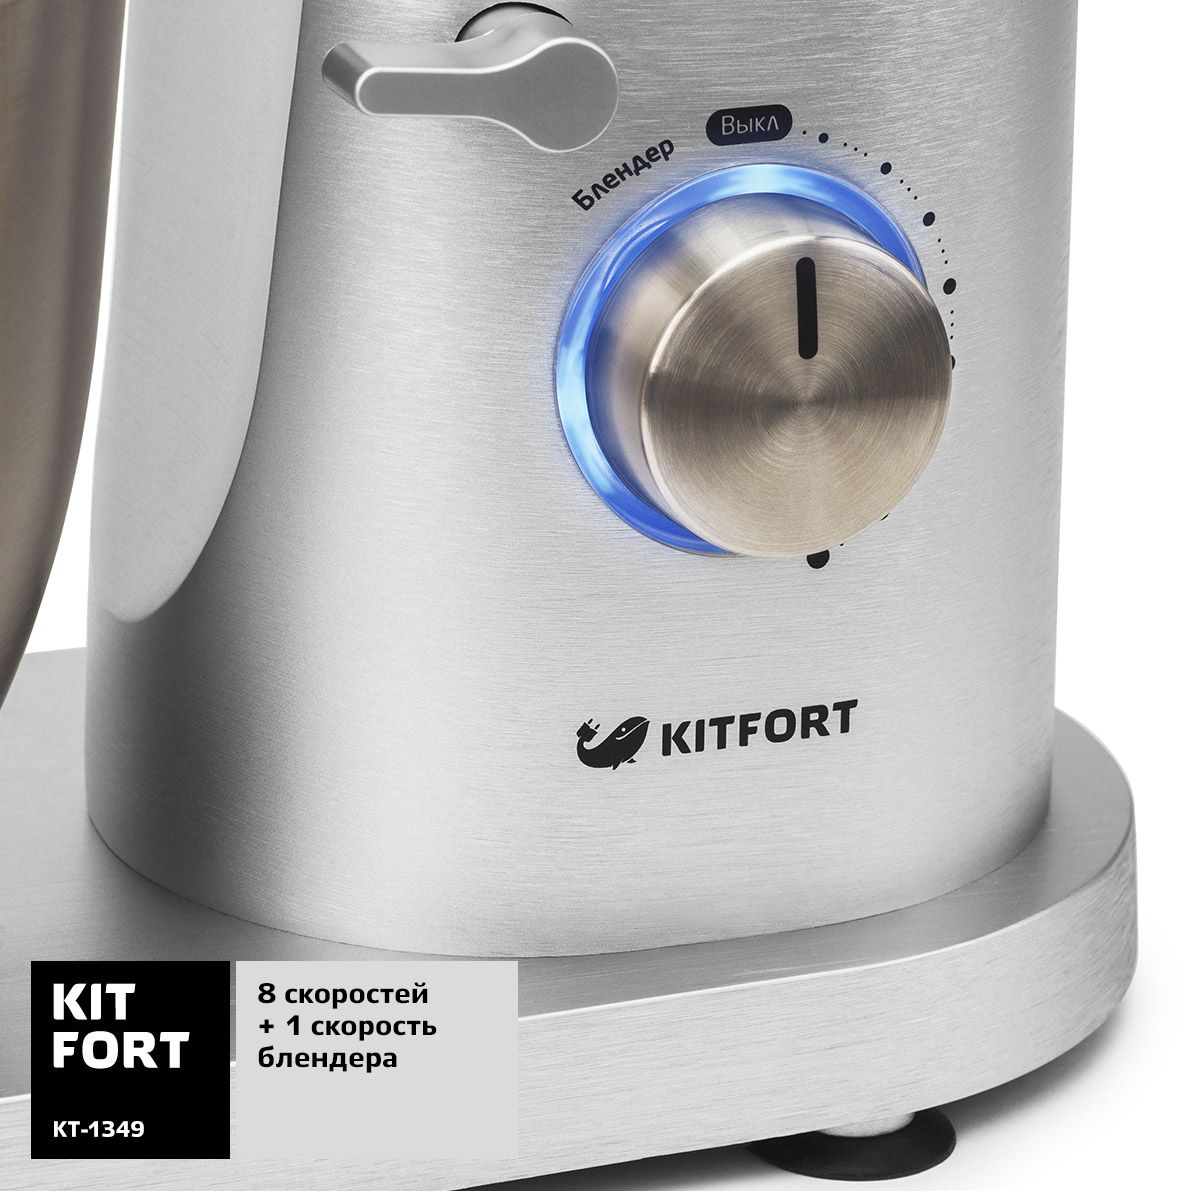  Kitfort -1349, Silver